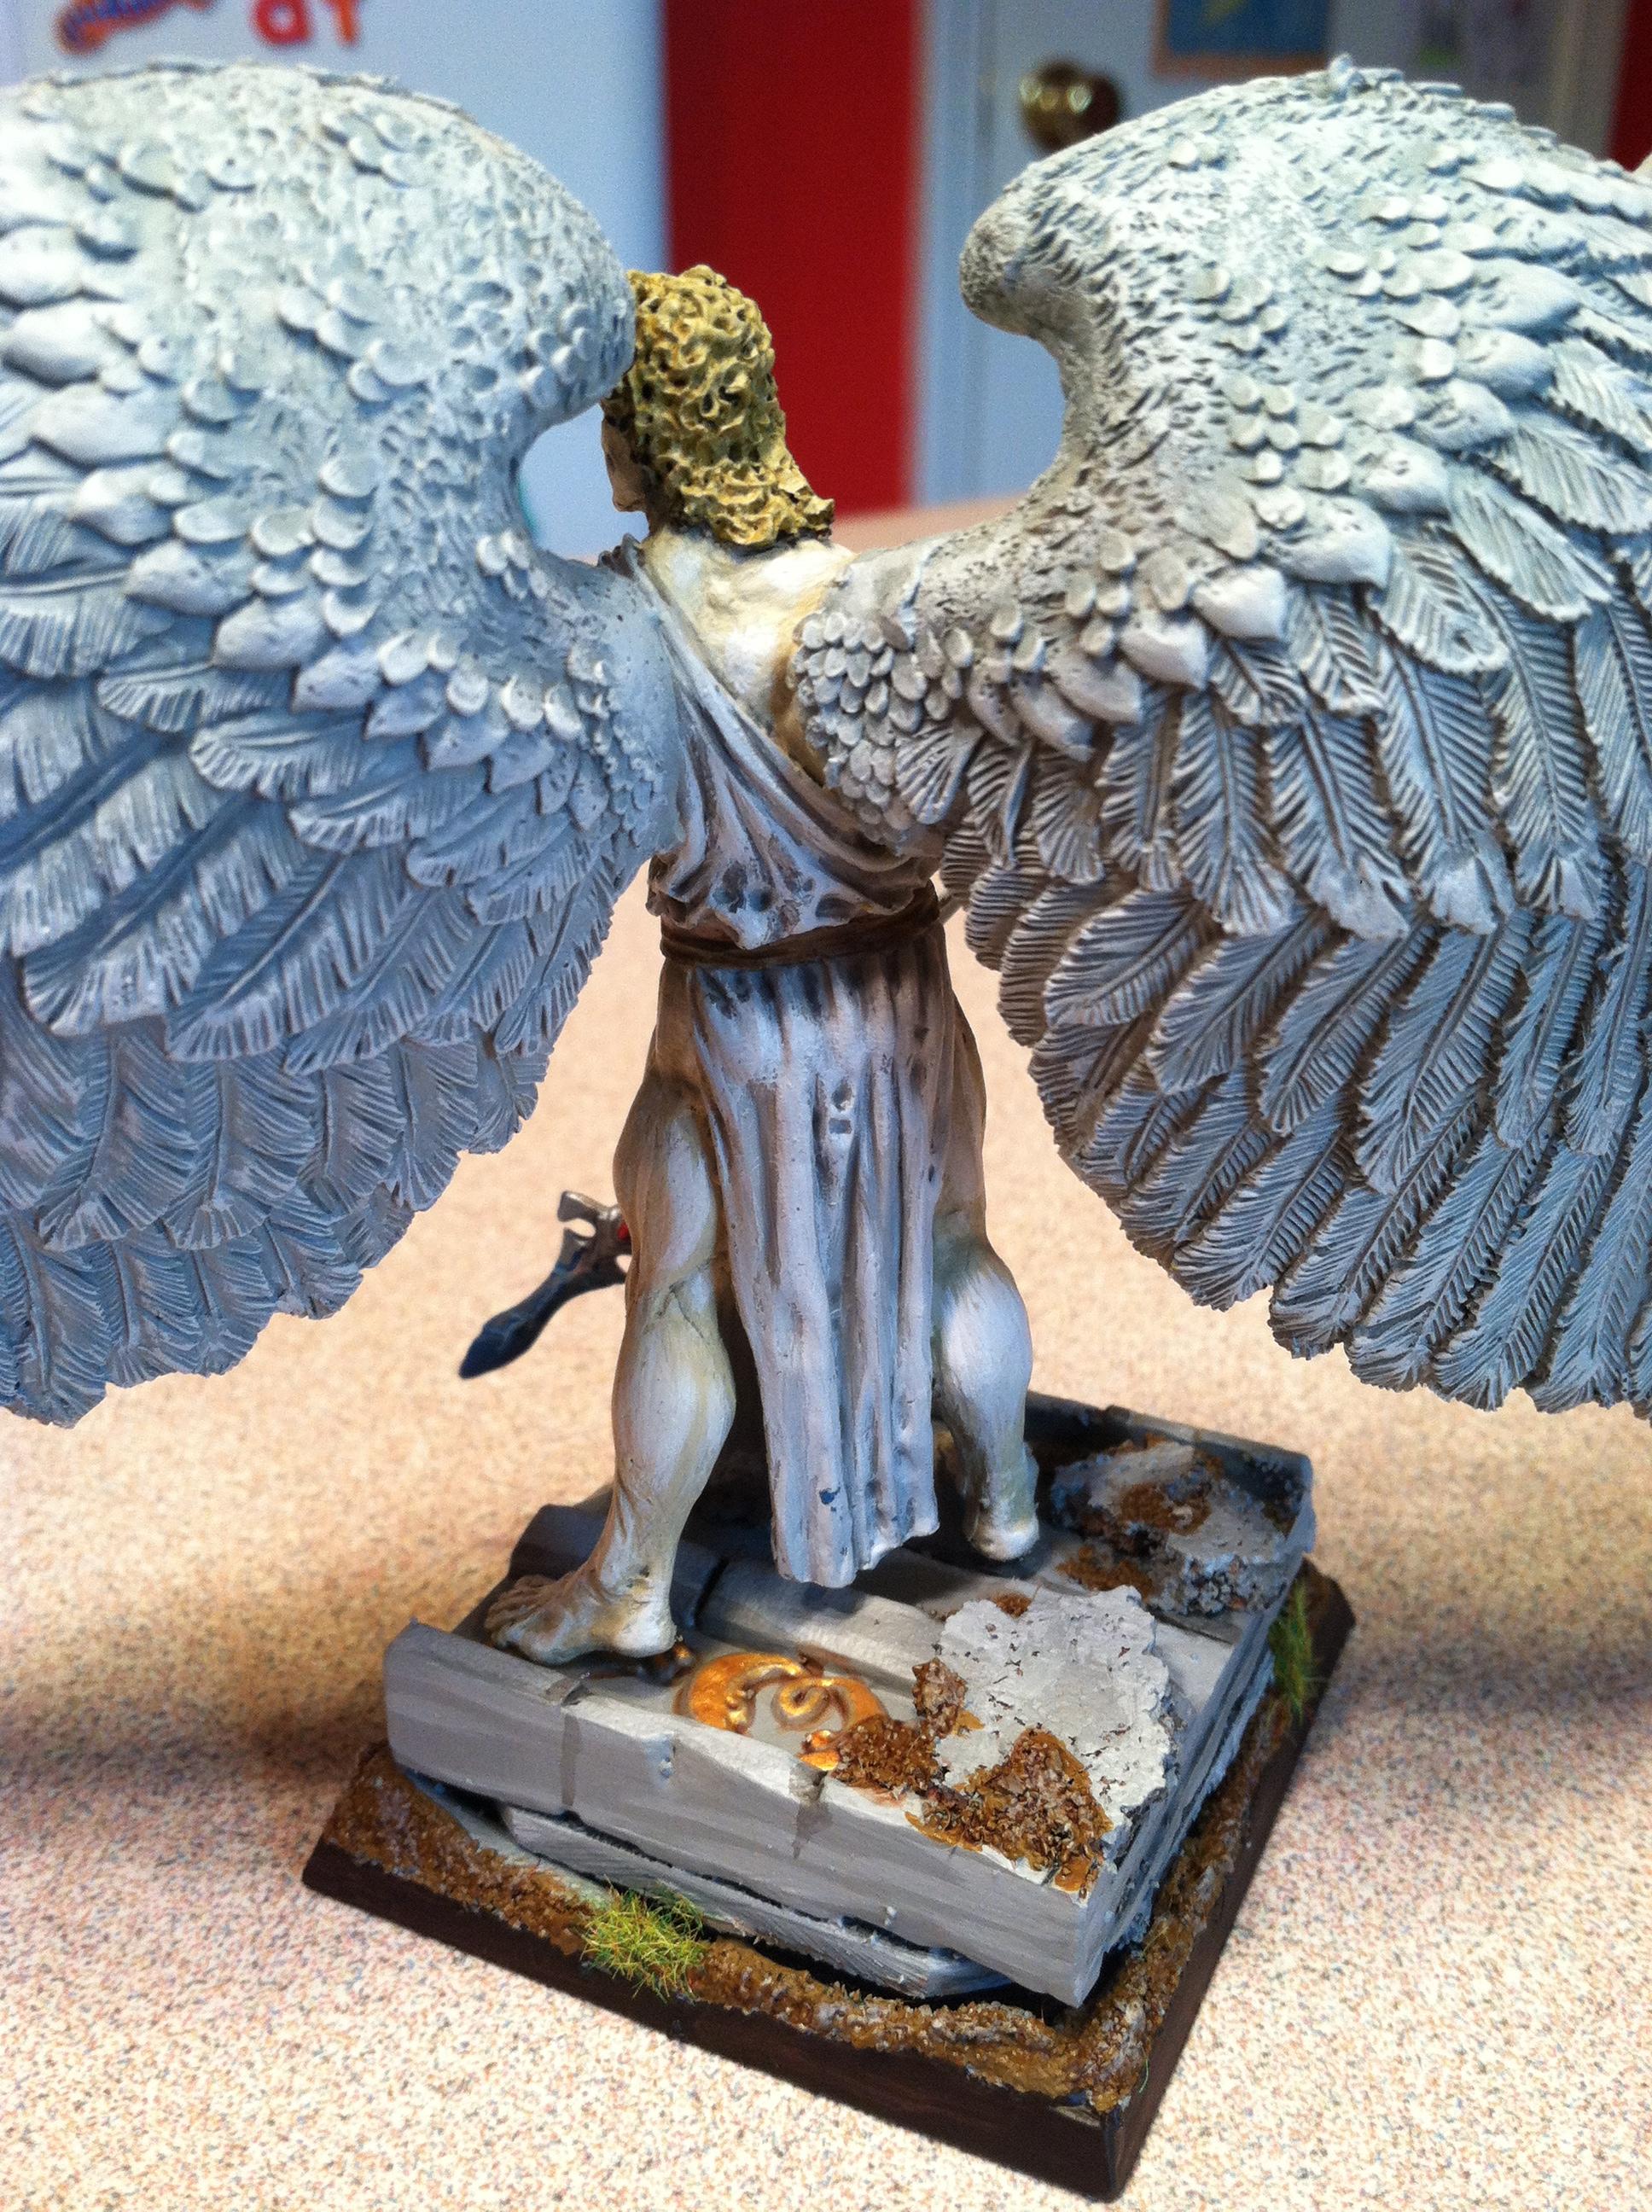 The Archangel Gibreel